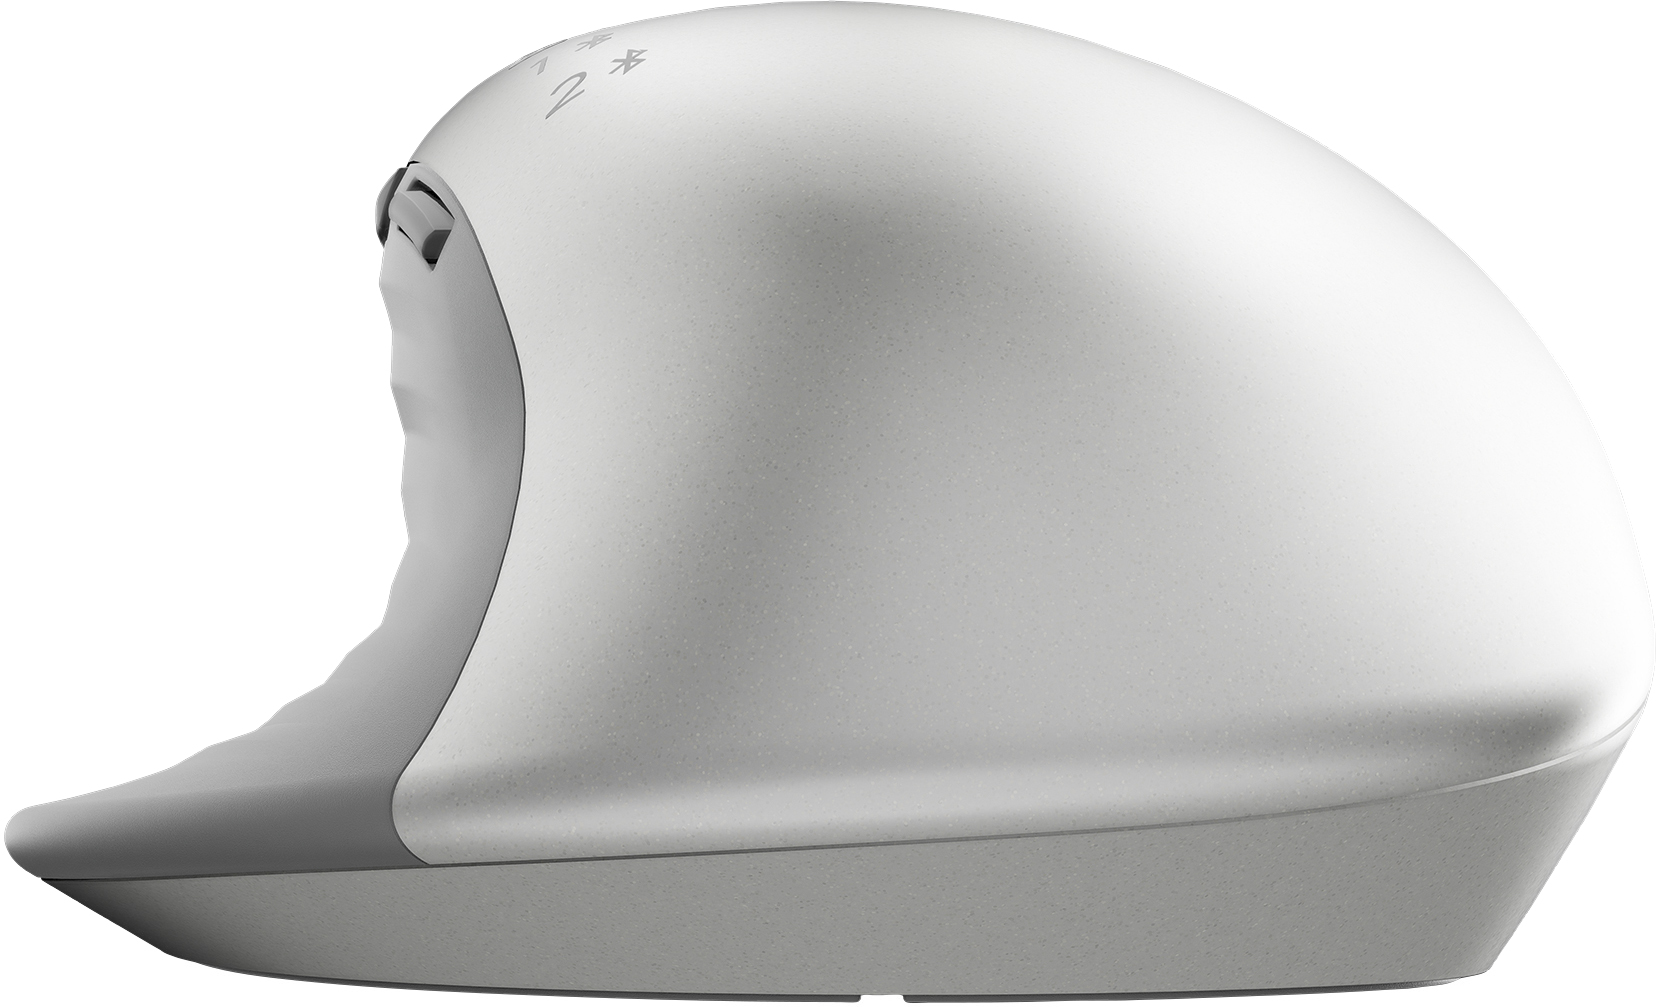 HP Mouse wireless 930 Creator [1D0K9AA]